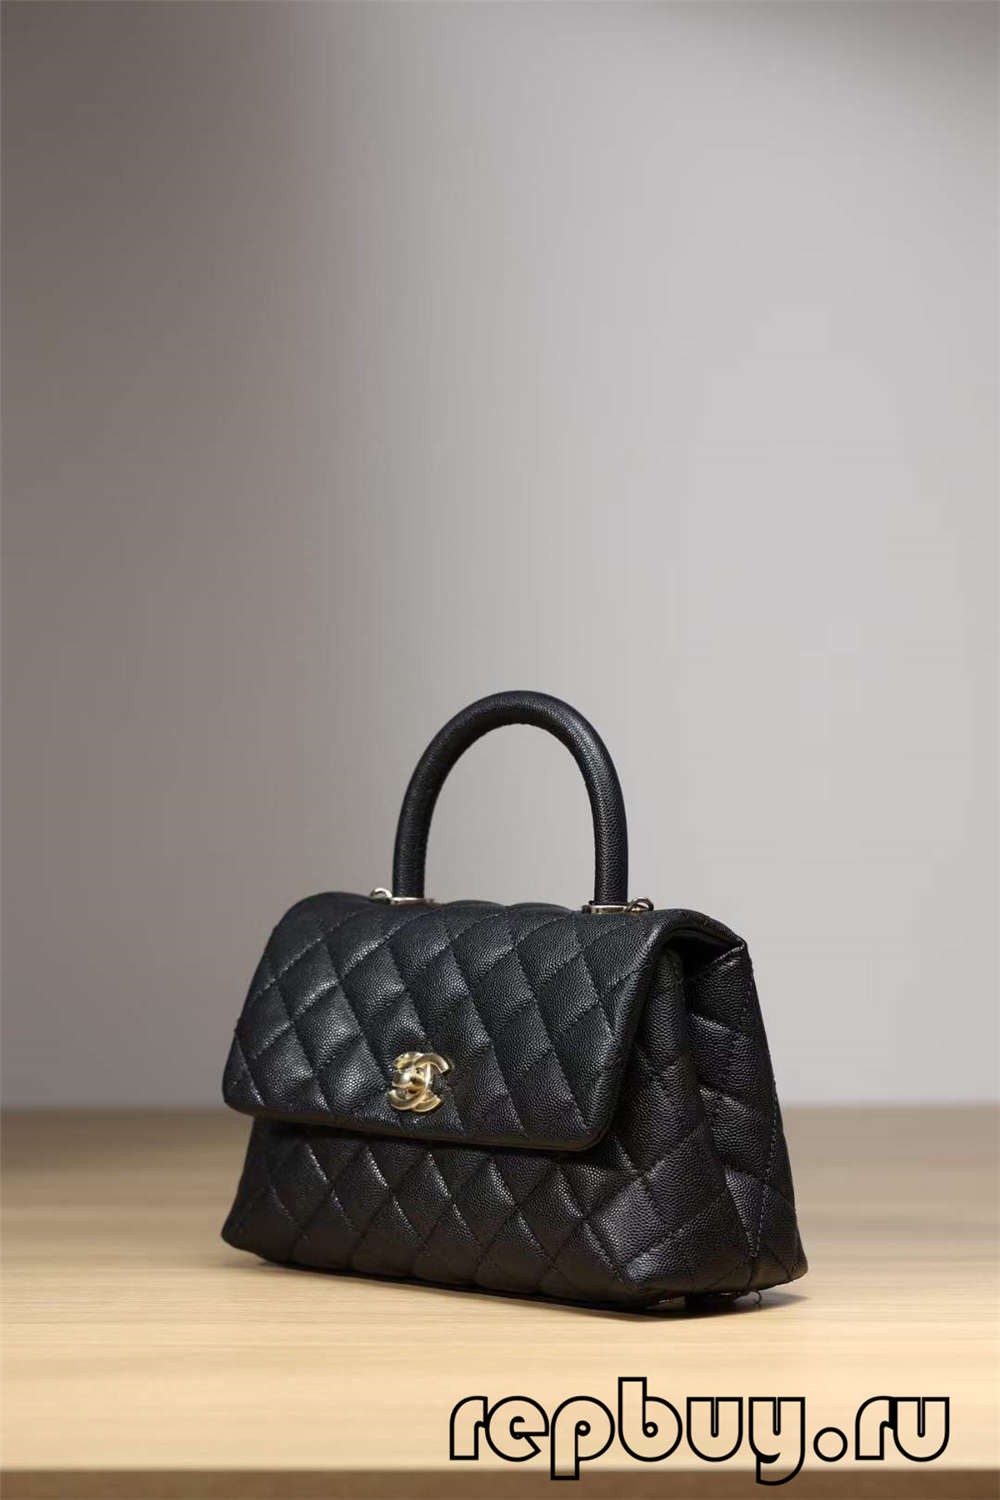 Chanel Coco Handle Top Replica Handbag Black Gold Buckle Look (2022 Updated) - Best Quality Fake Louis Vuitton Bag Online Store, Replica designer bag ru